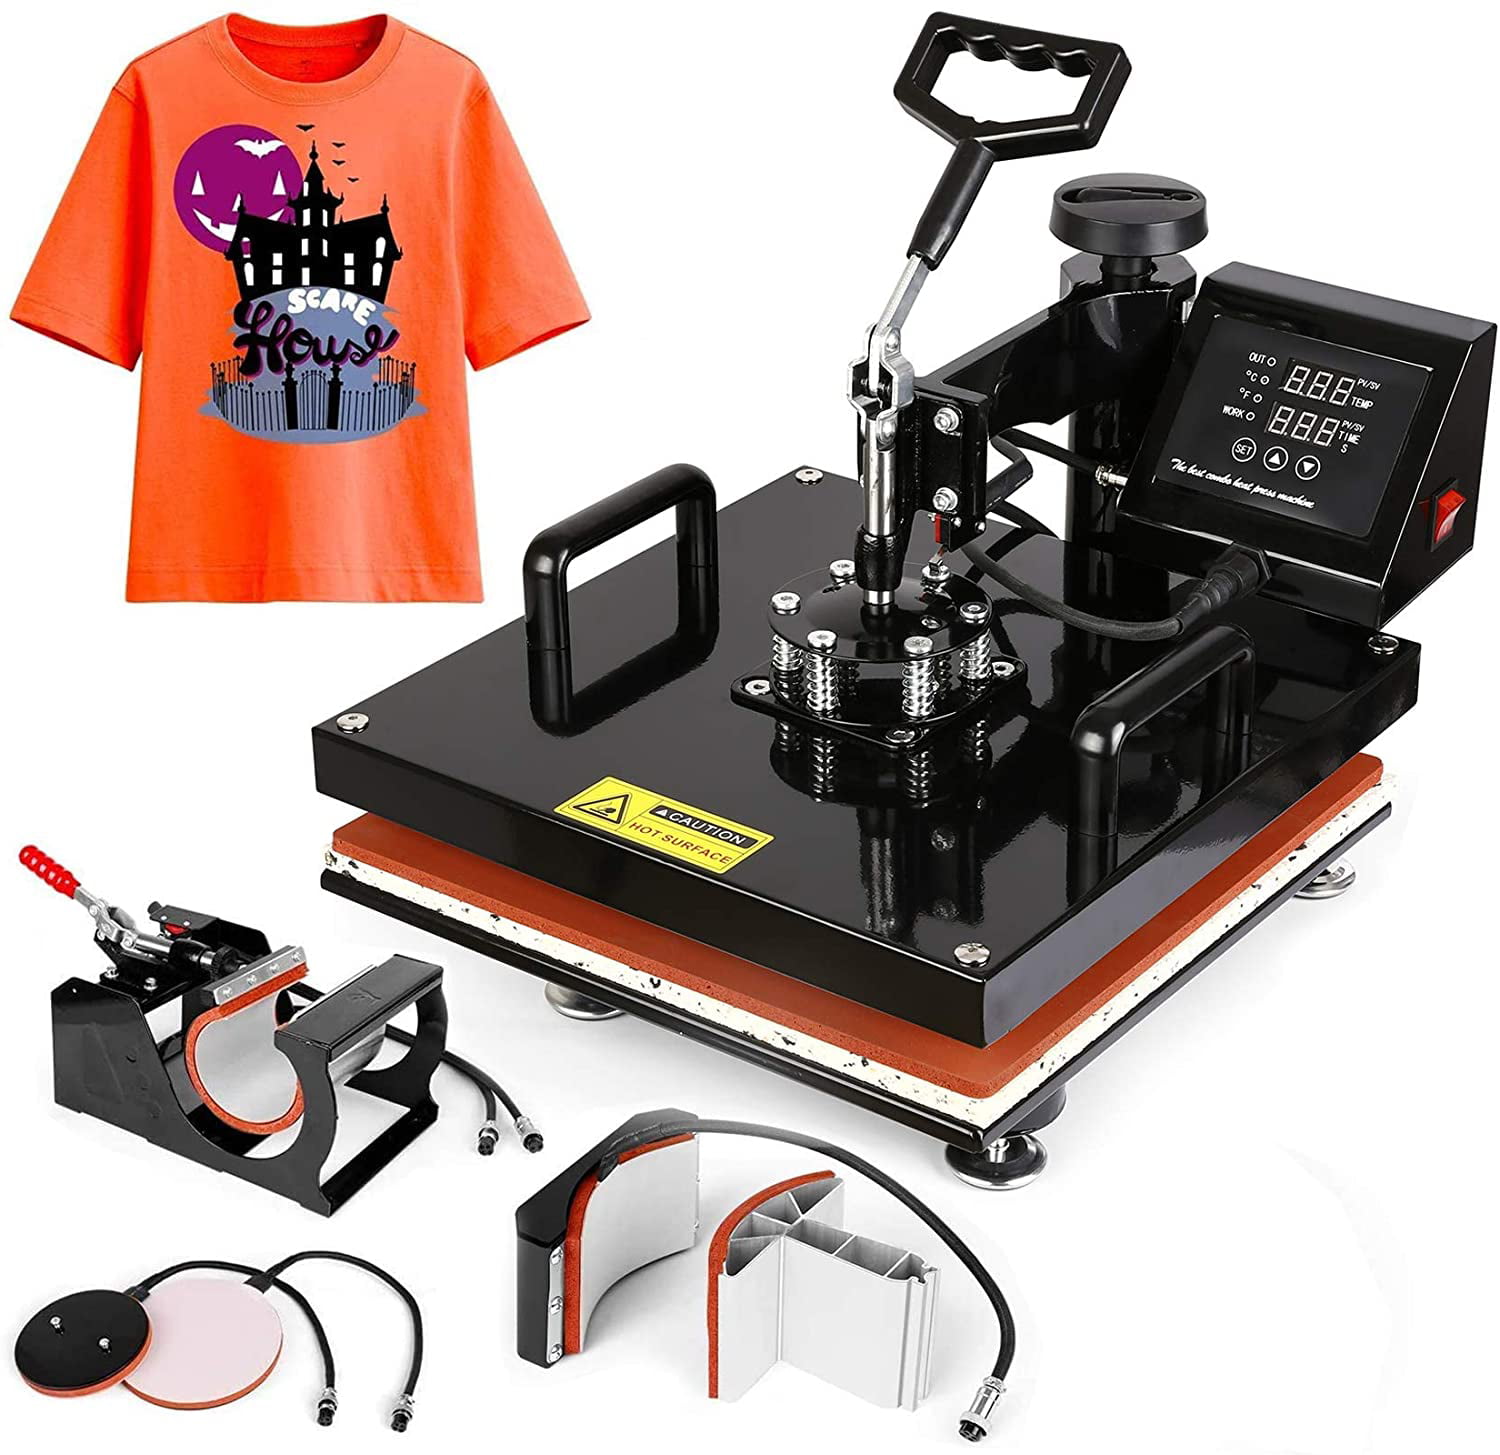 8in1 Heat Press 15"x15" Transfer Printing Machine Printer T-Shirt Sublimation 